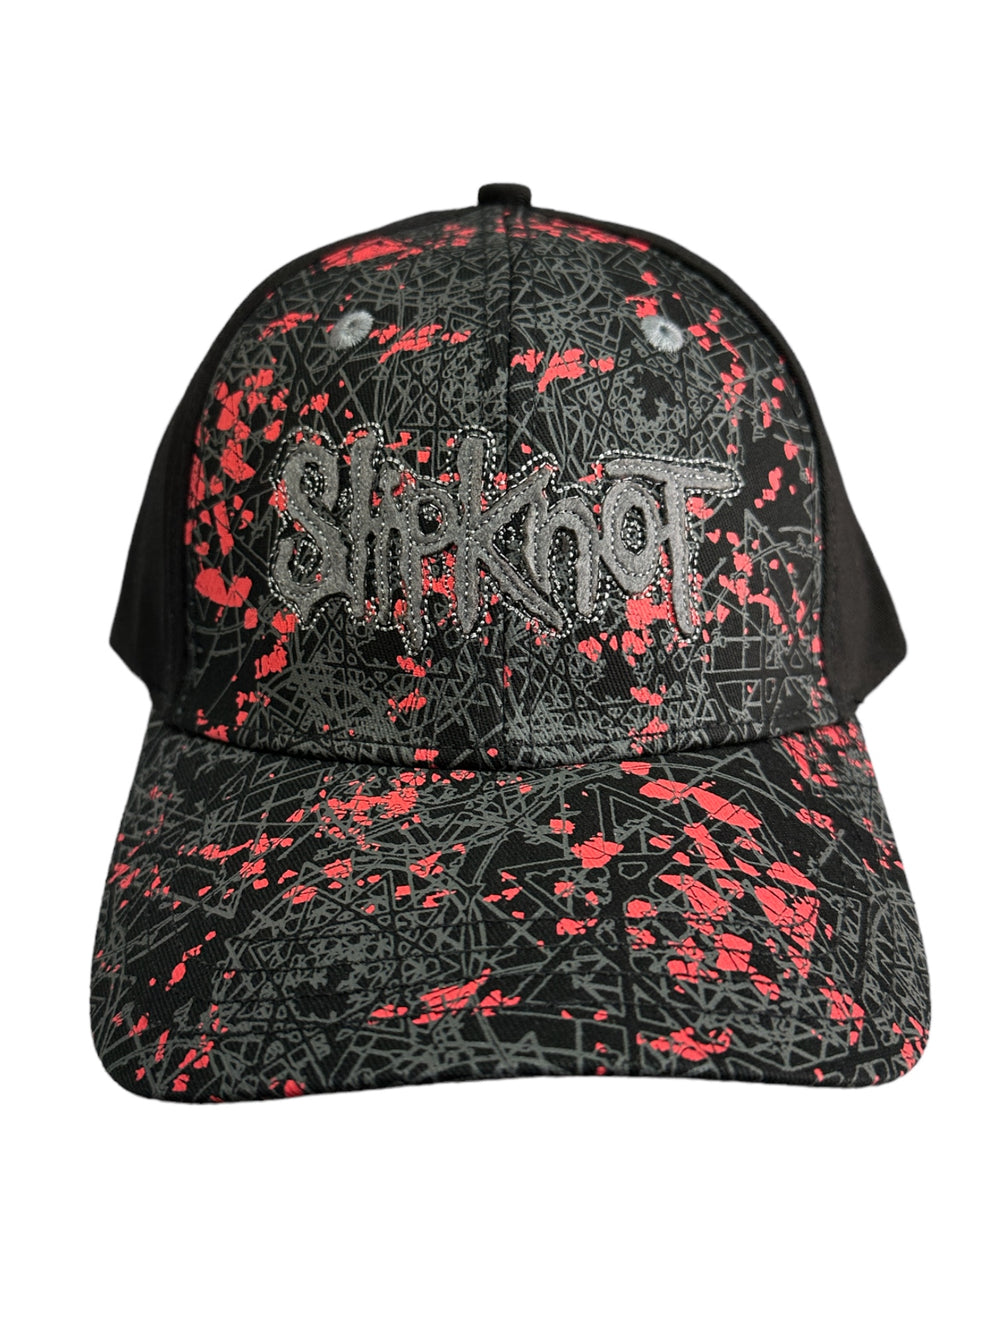 Slipknot Nonagrams Official Embroidered Peak Cap Brand New